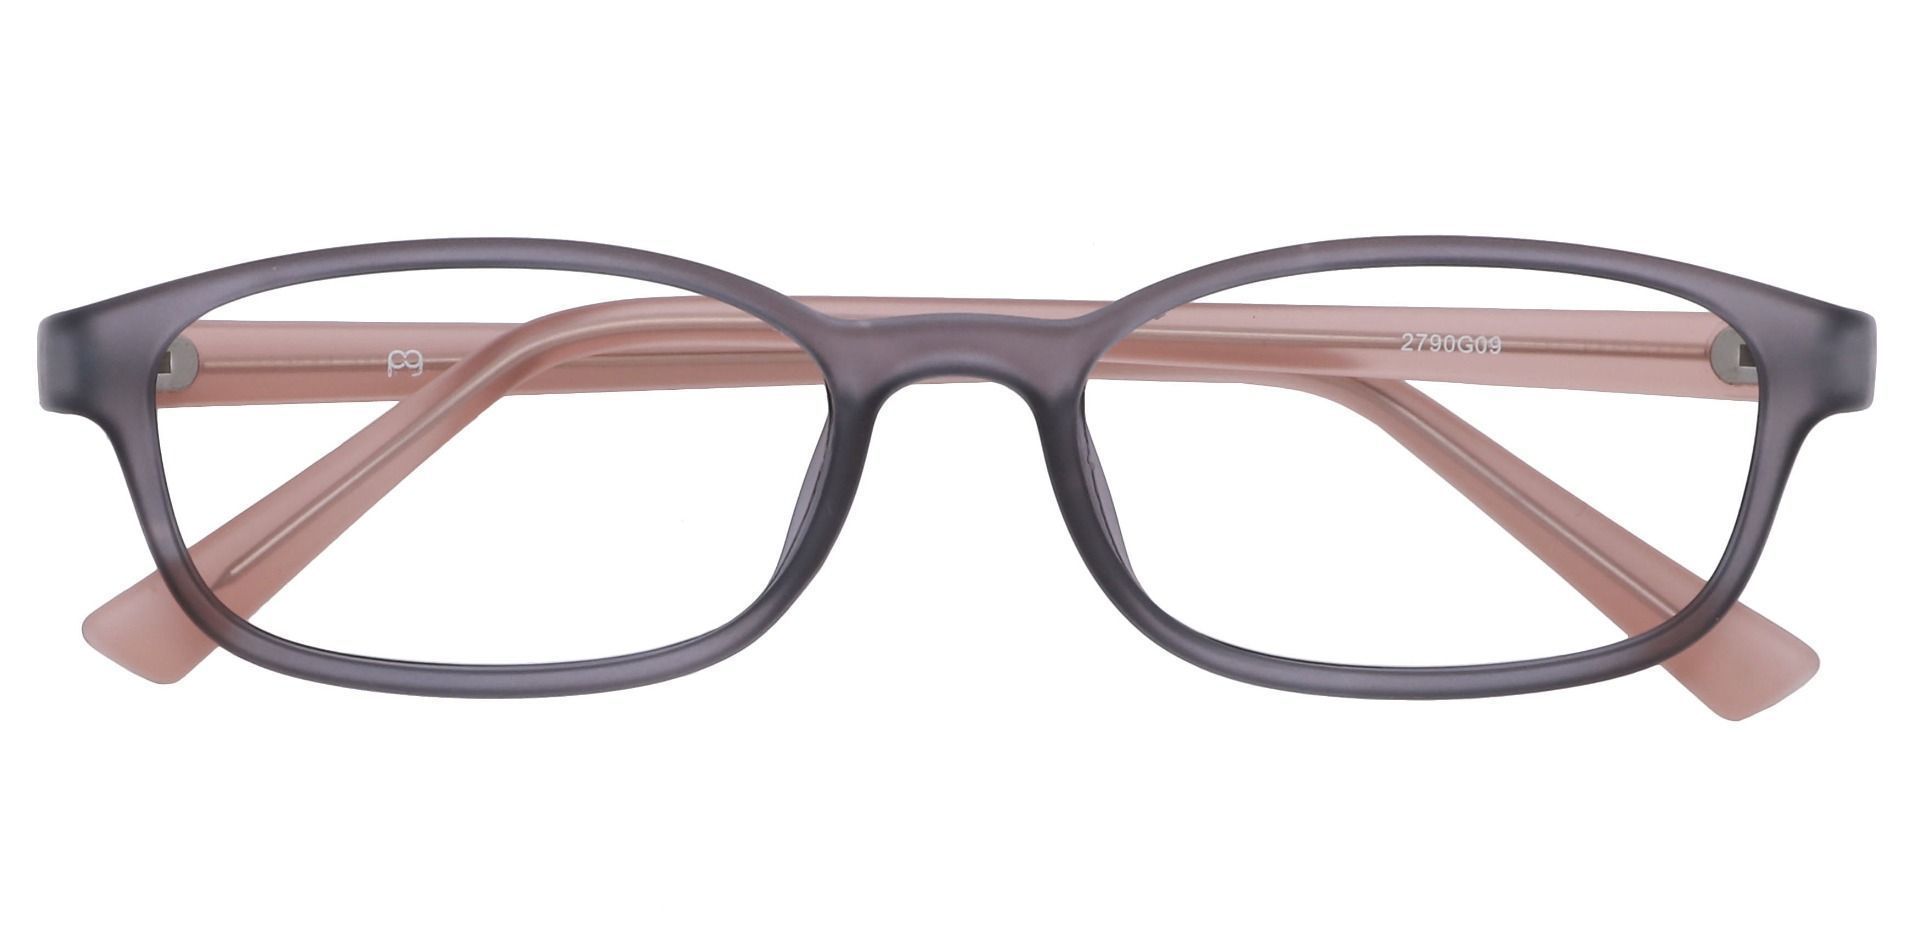 Kia Oval Eyeglasses Frame - Grey Matte